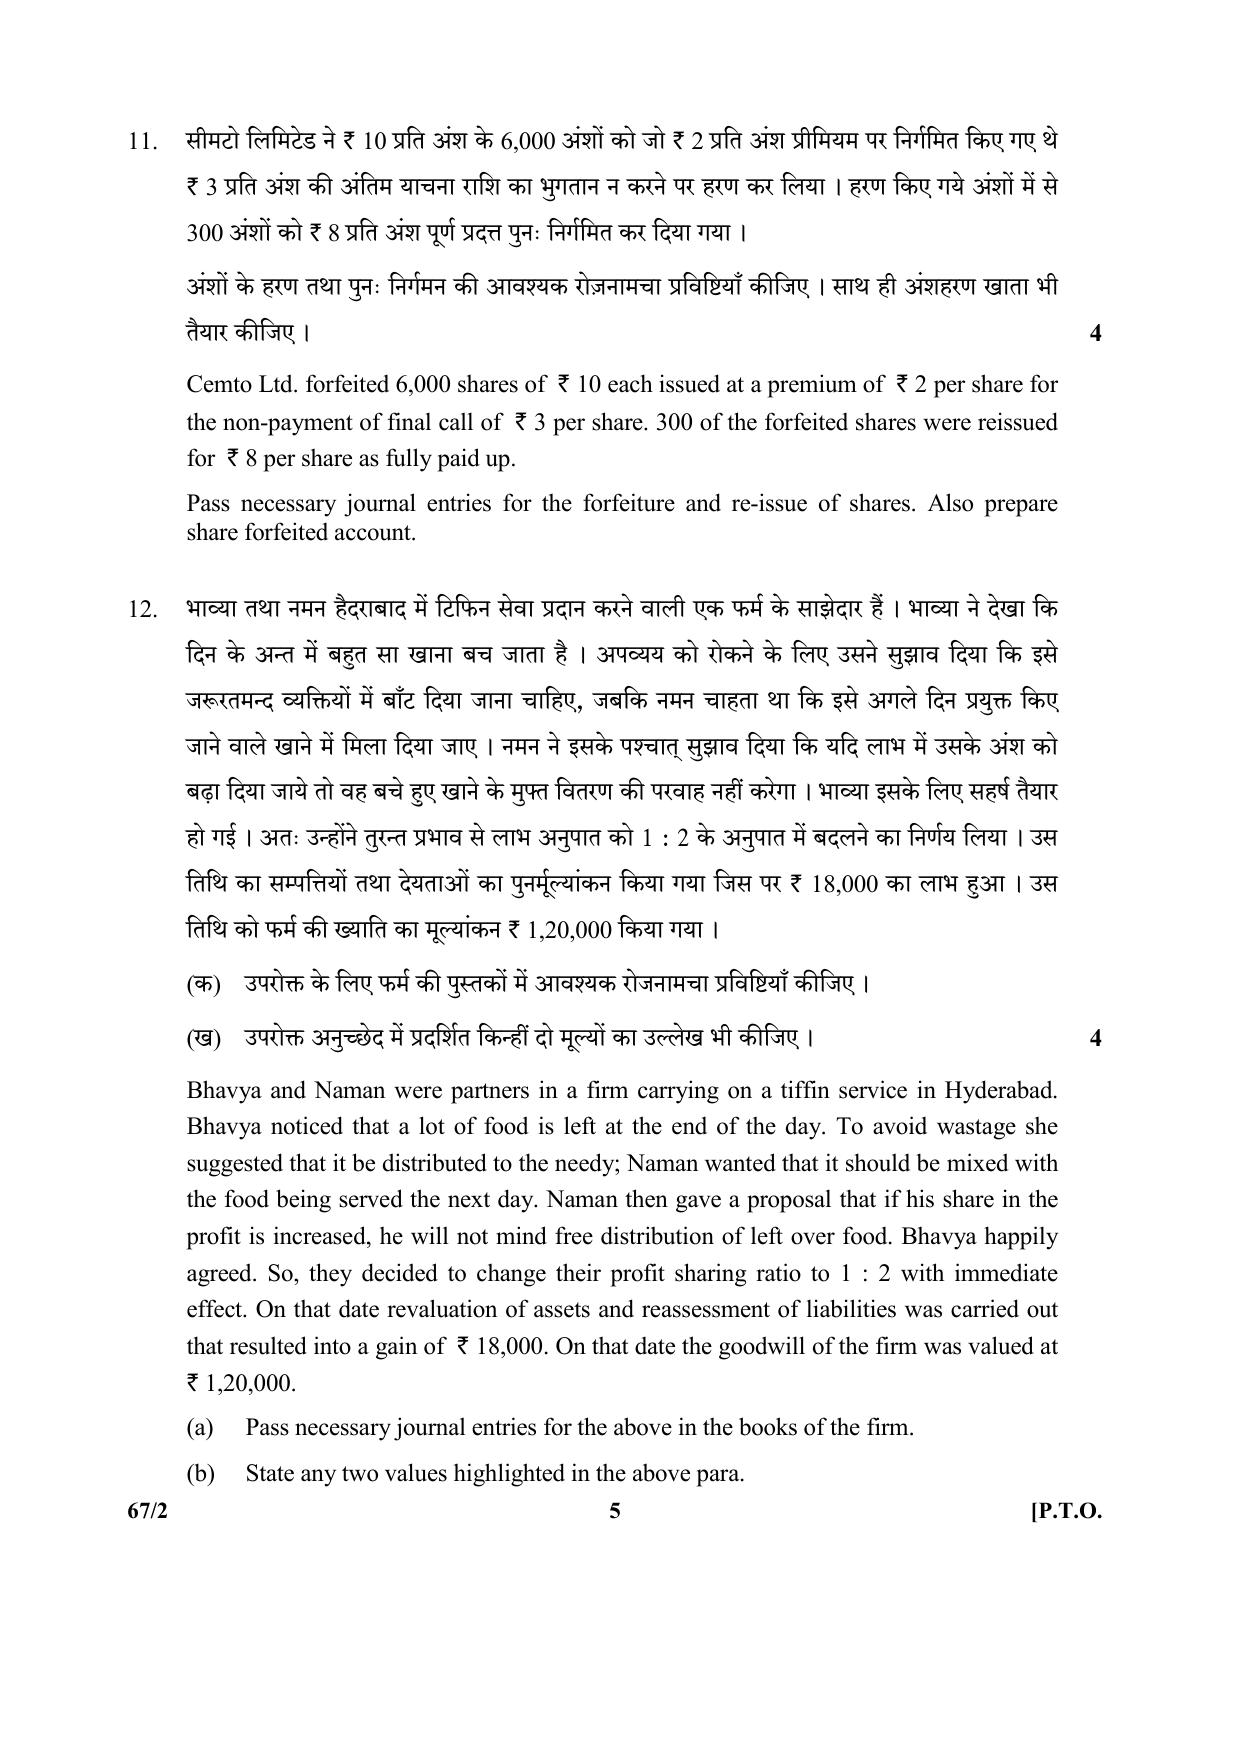 CBSE Class 12 67-2  (Accountancy) 2017-comptt Question Paper - Page 5